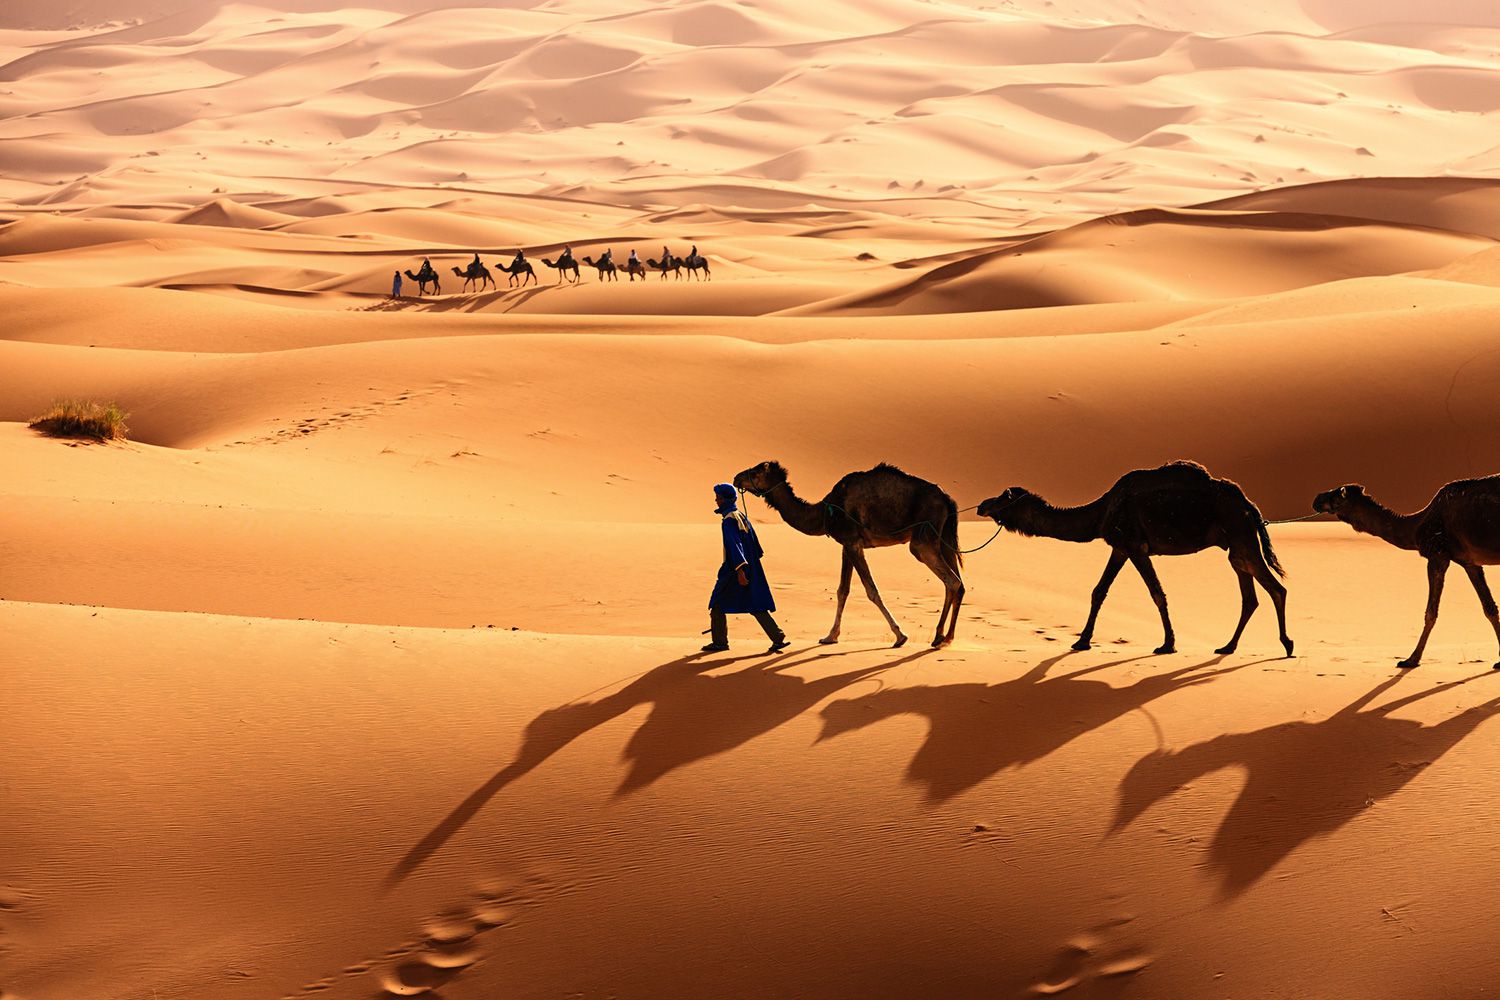 Learn About the Sahara Desert